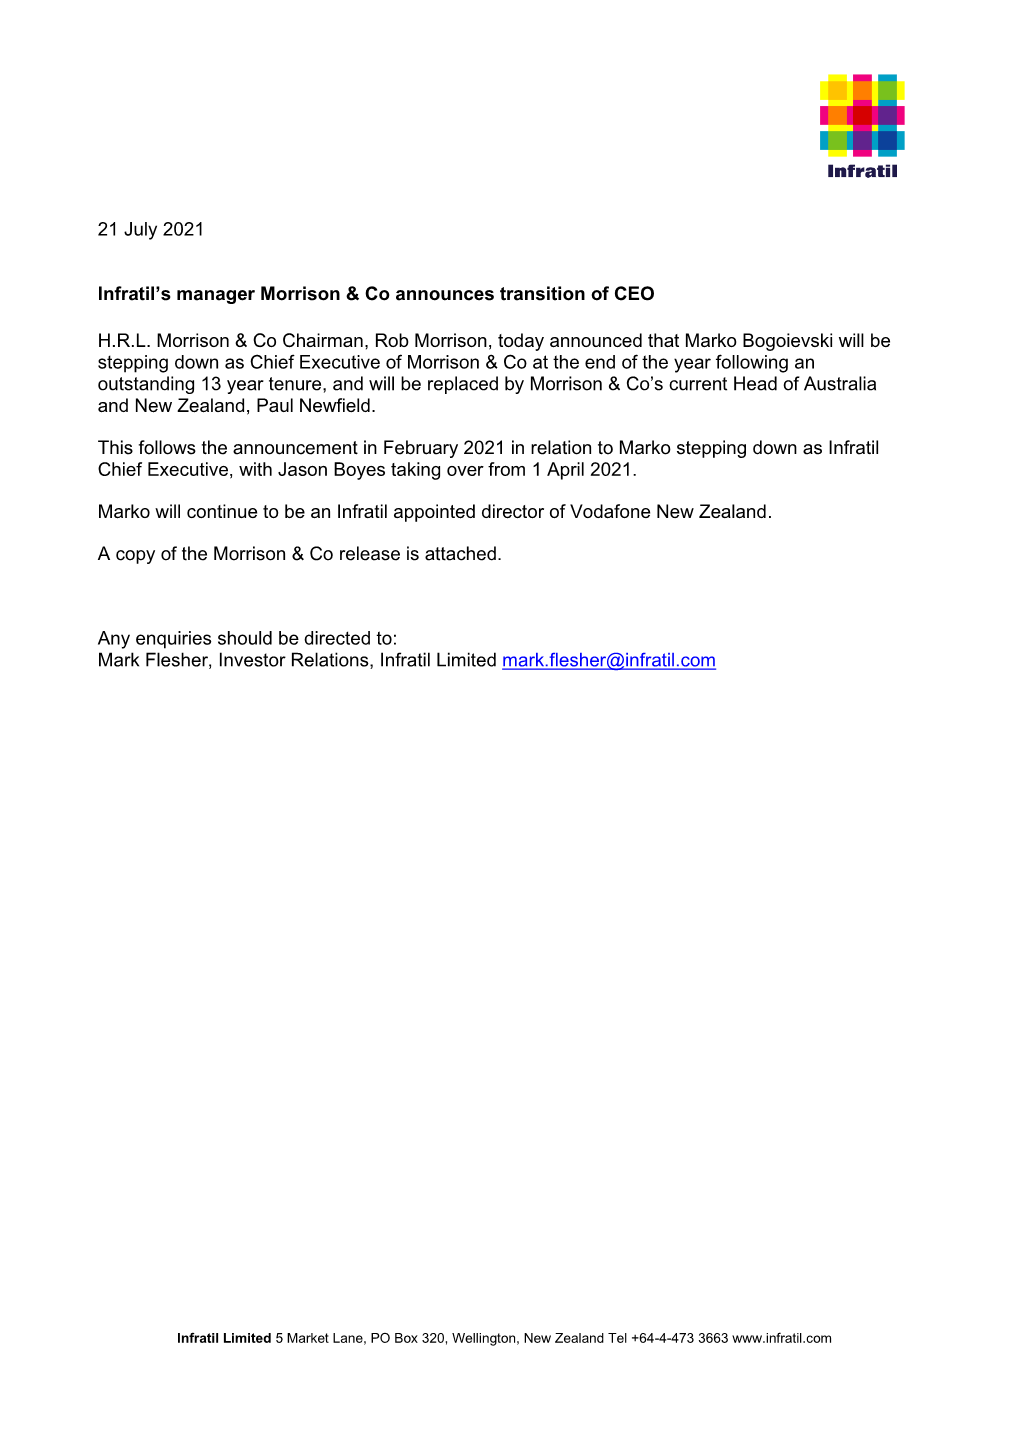 21 July 2021 Infratil's Manager Morrison & Co Announces